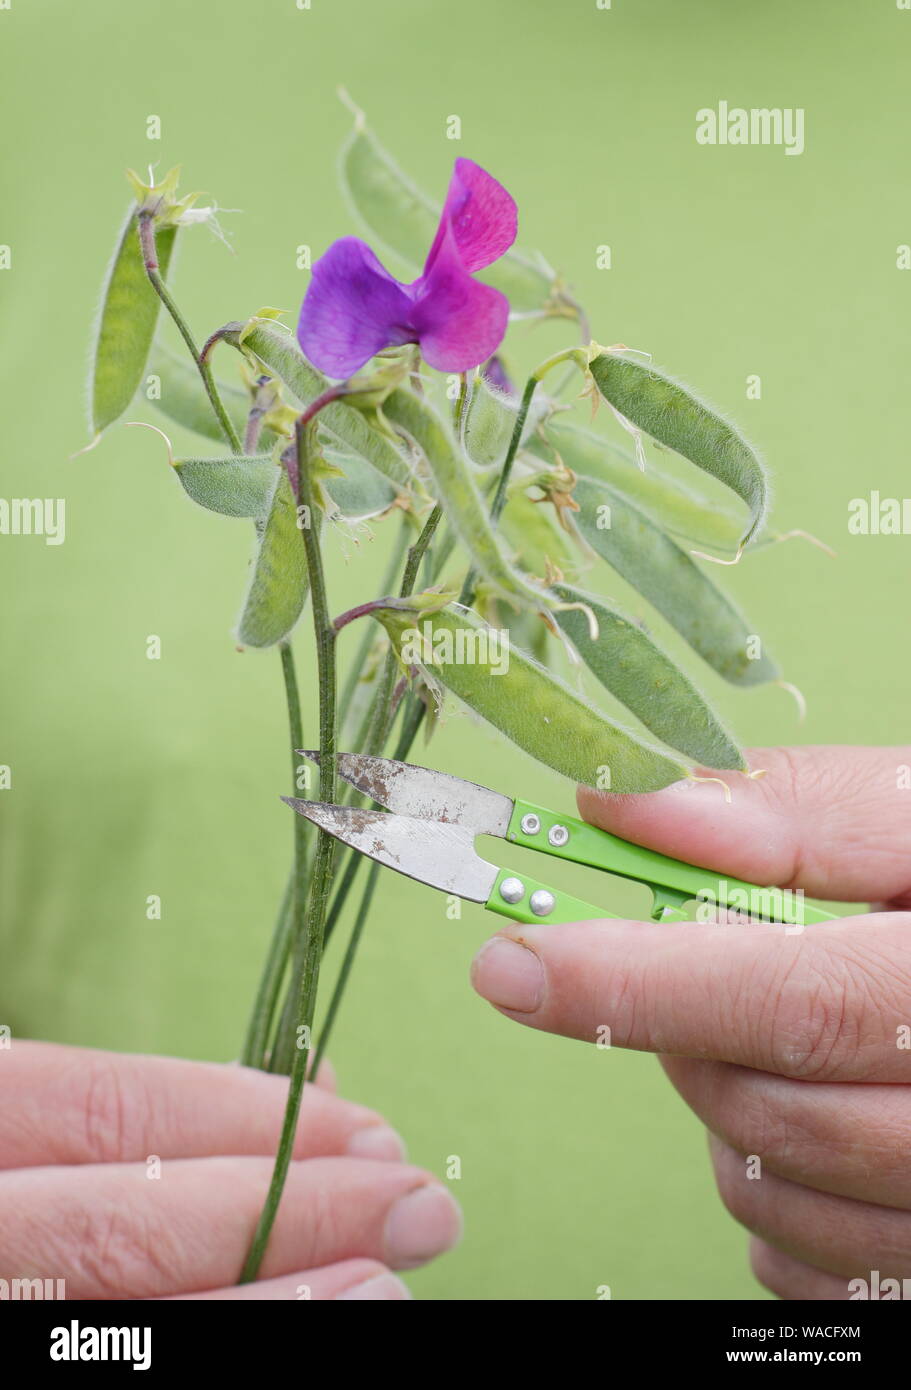 Lathyrus odoratus. Deadheading sweet pea seed pods to encourage new flower production. Stock Photo